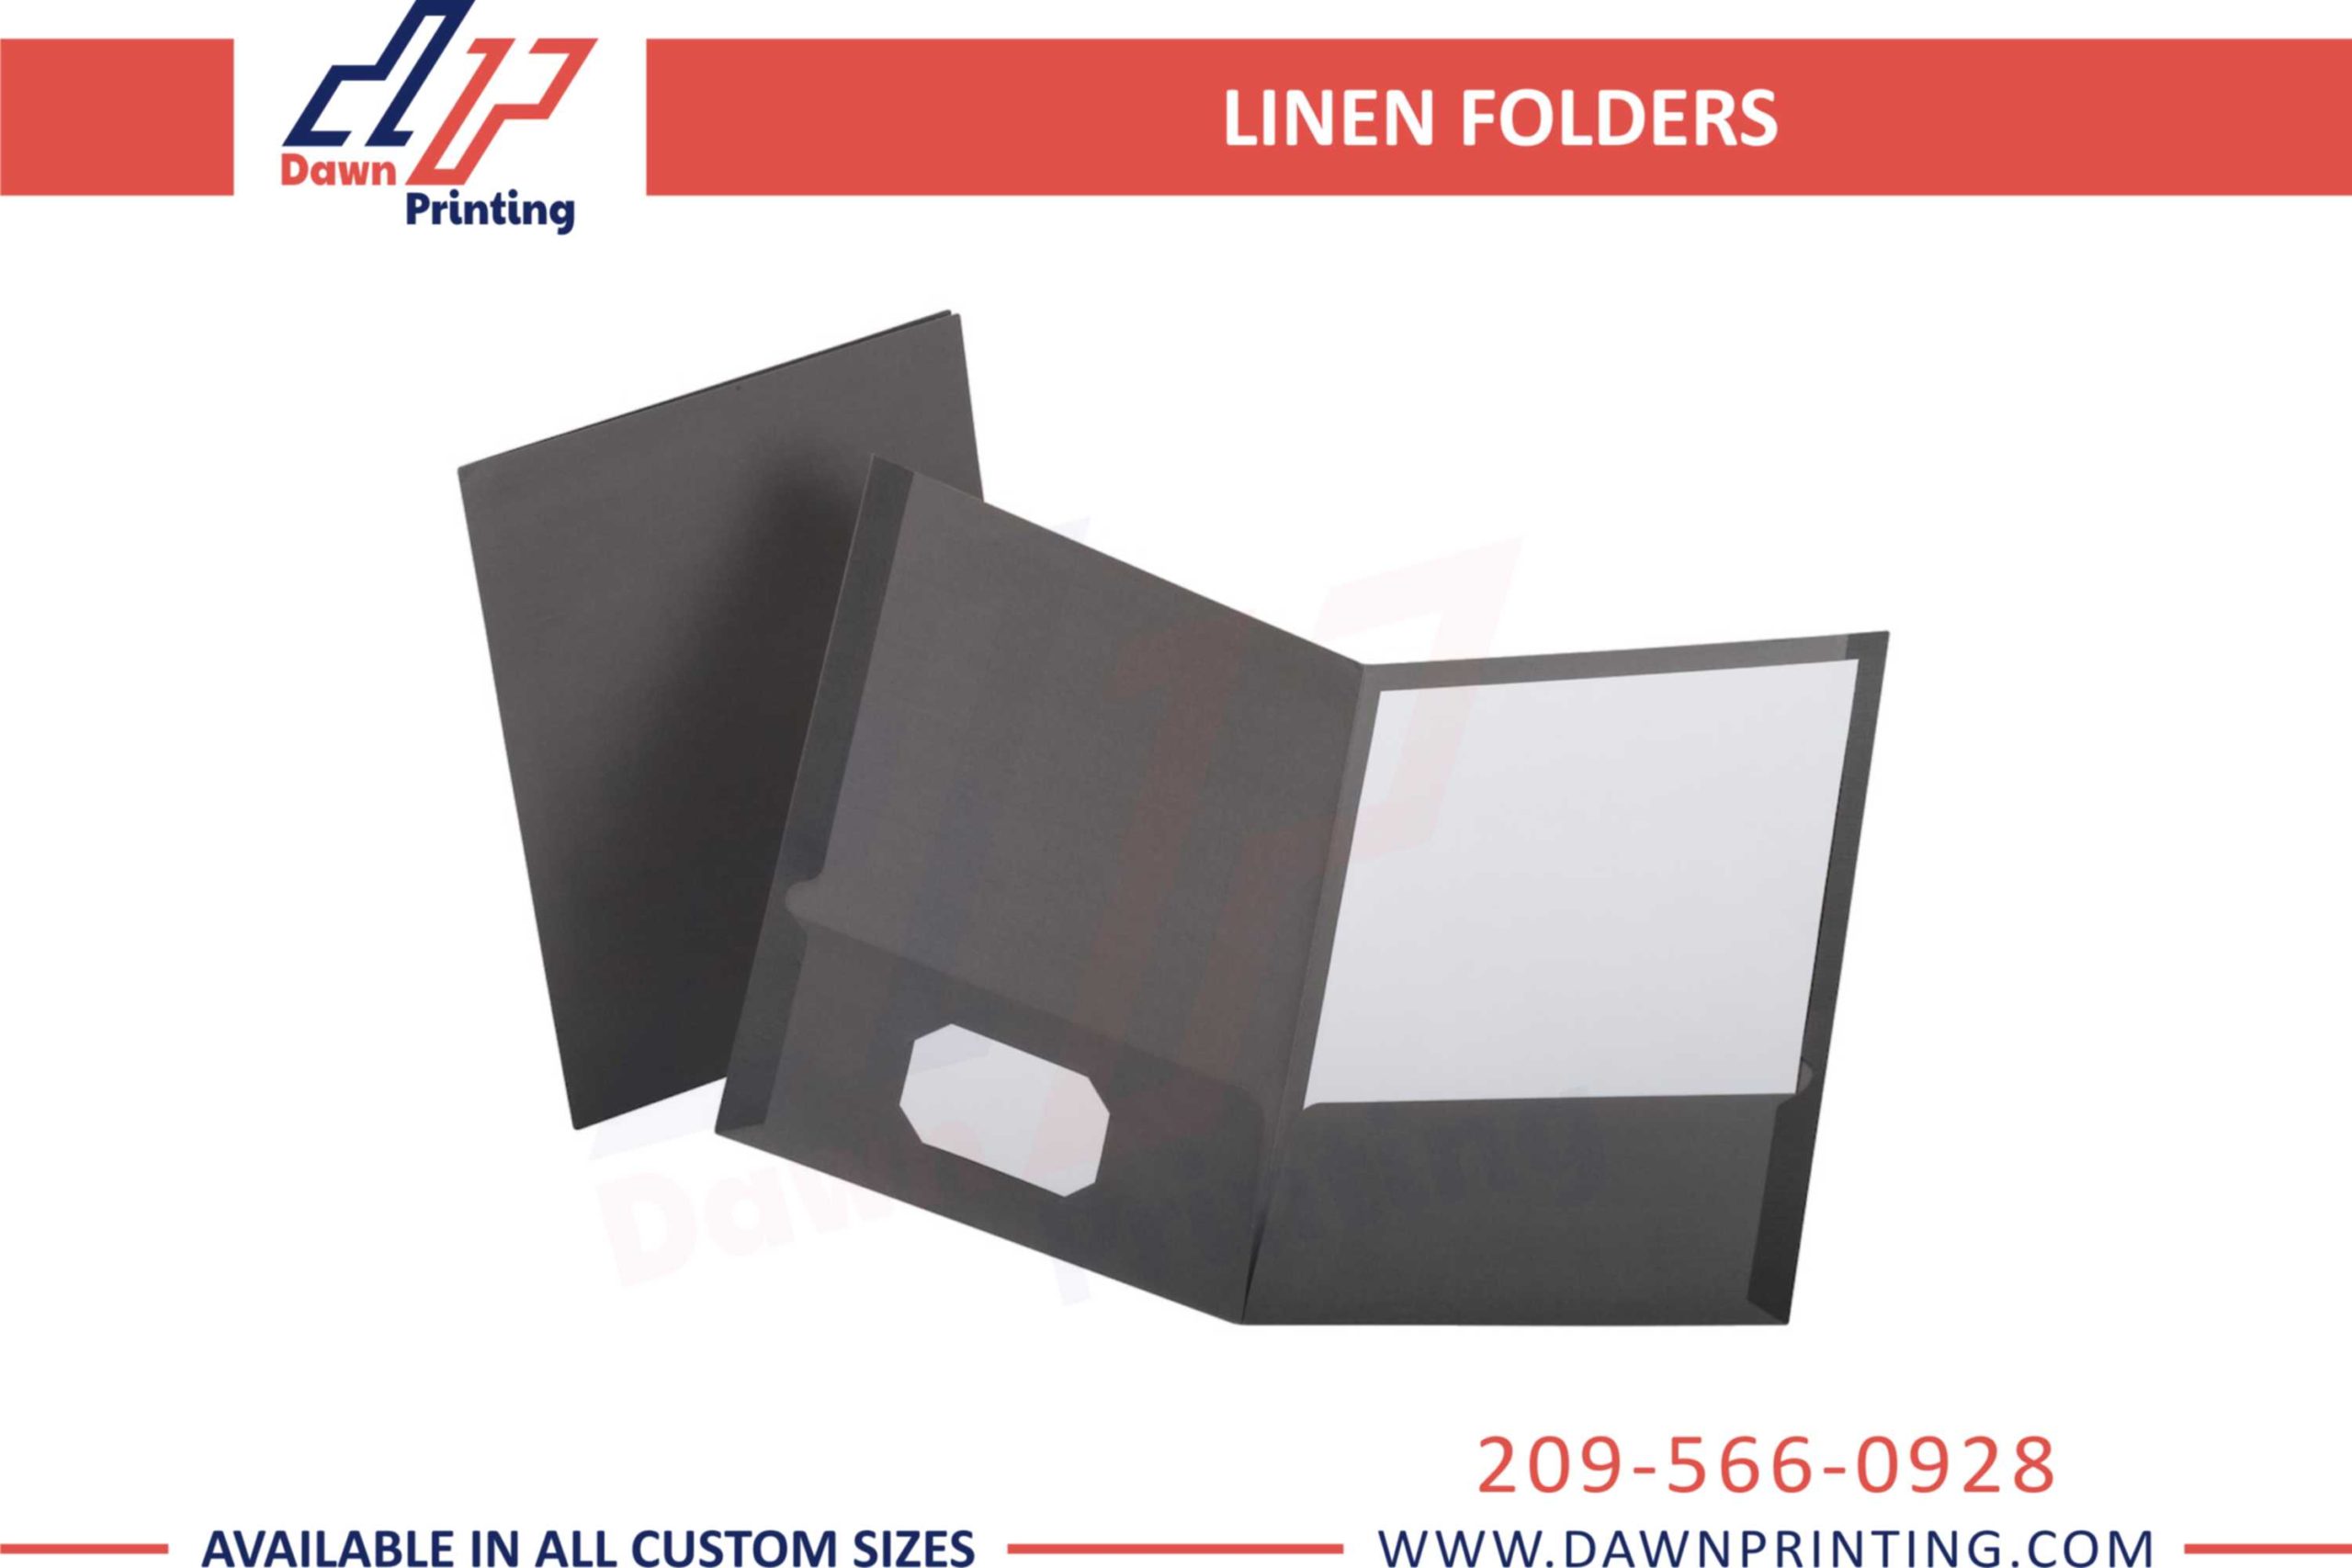 Custom Printed Linen Folders - Dawn Printing